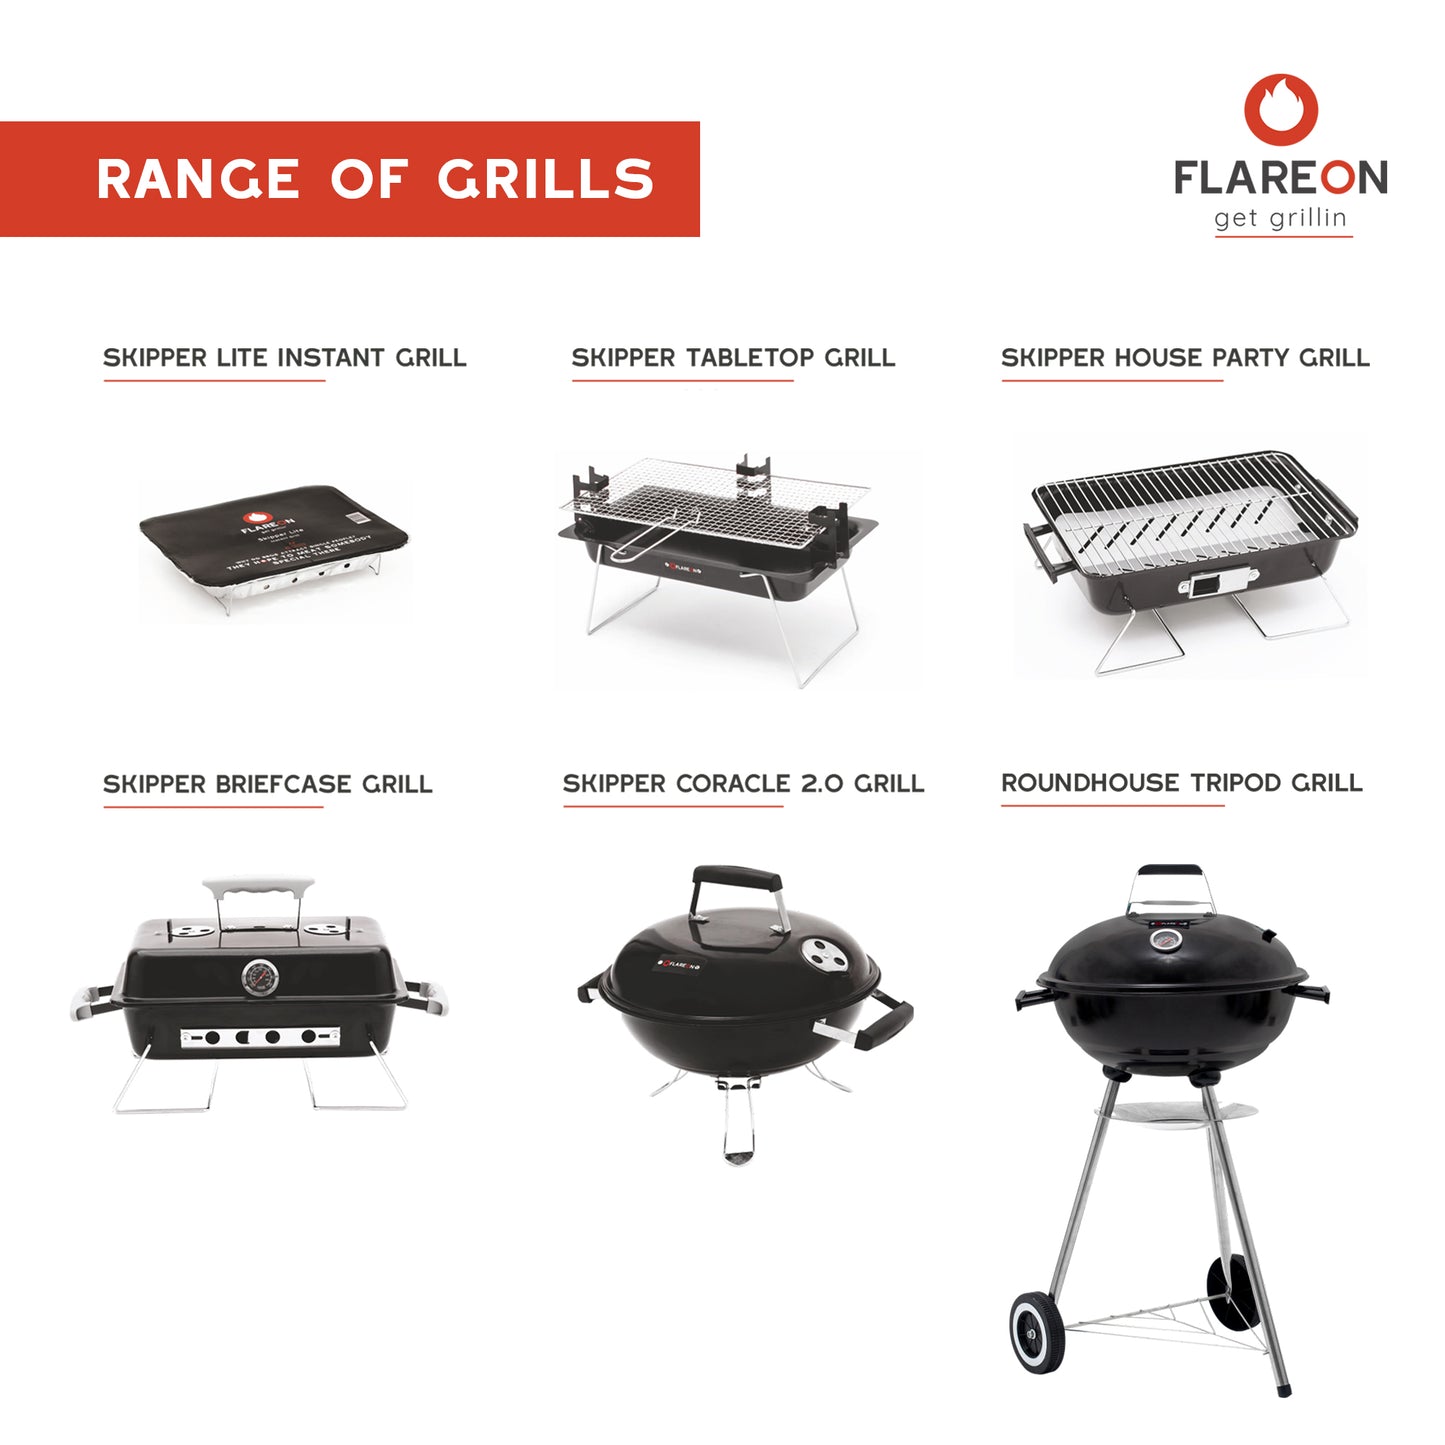 FlareOn's Range of Grills